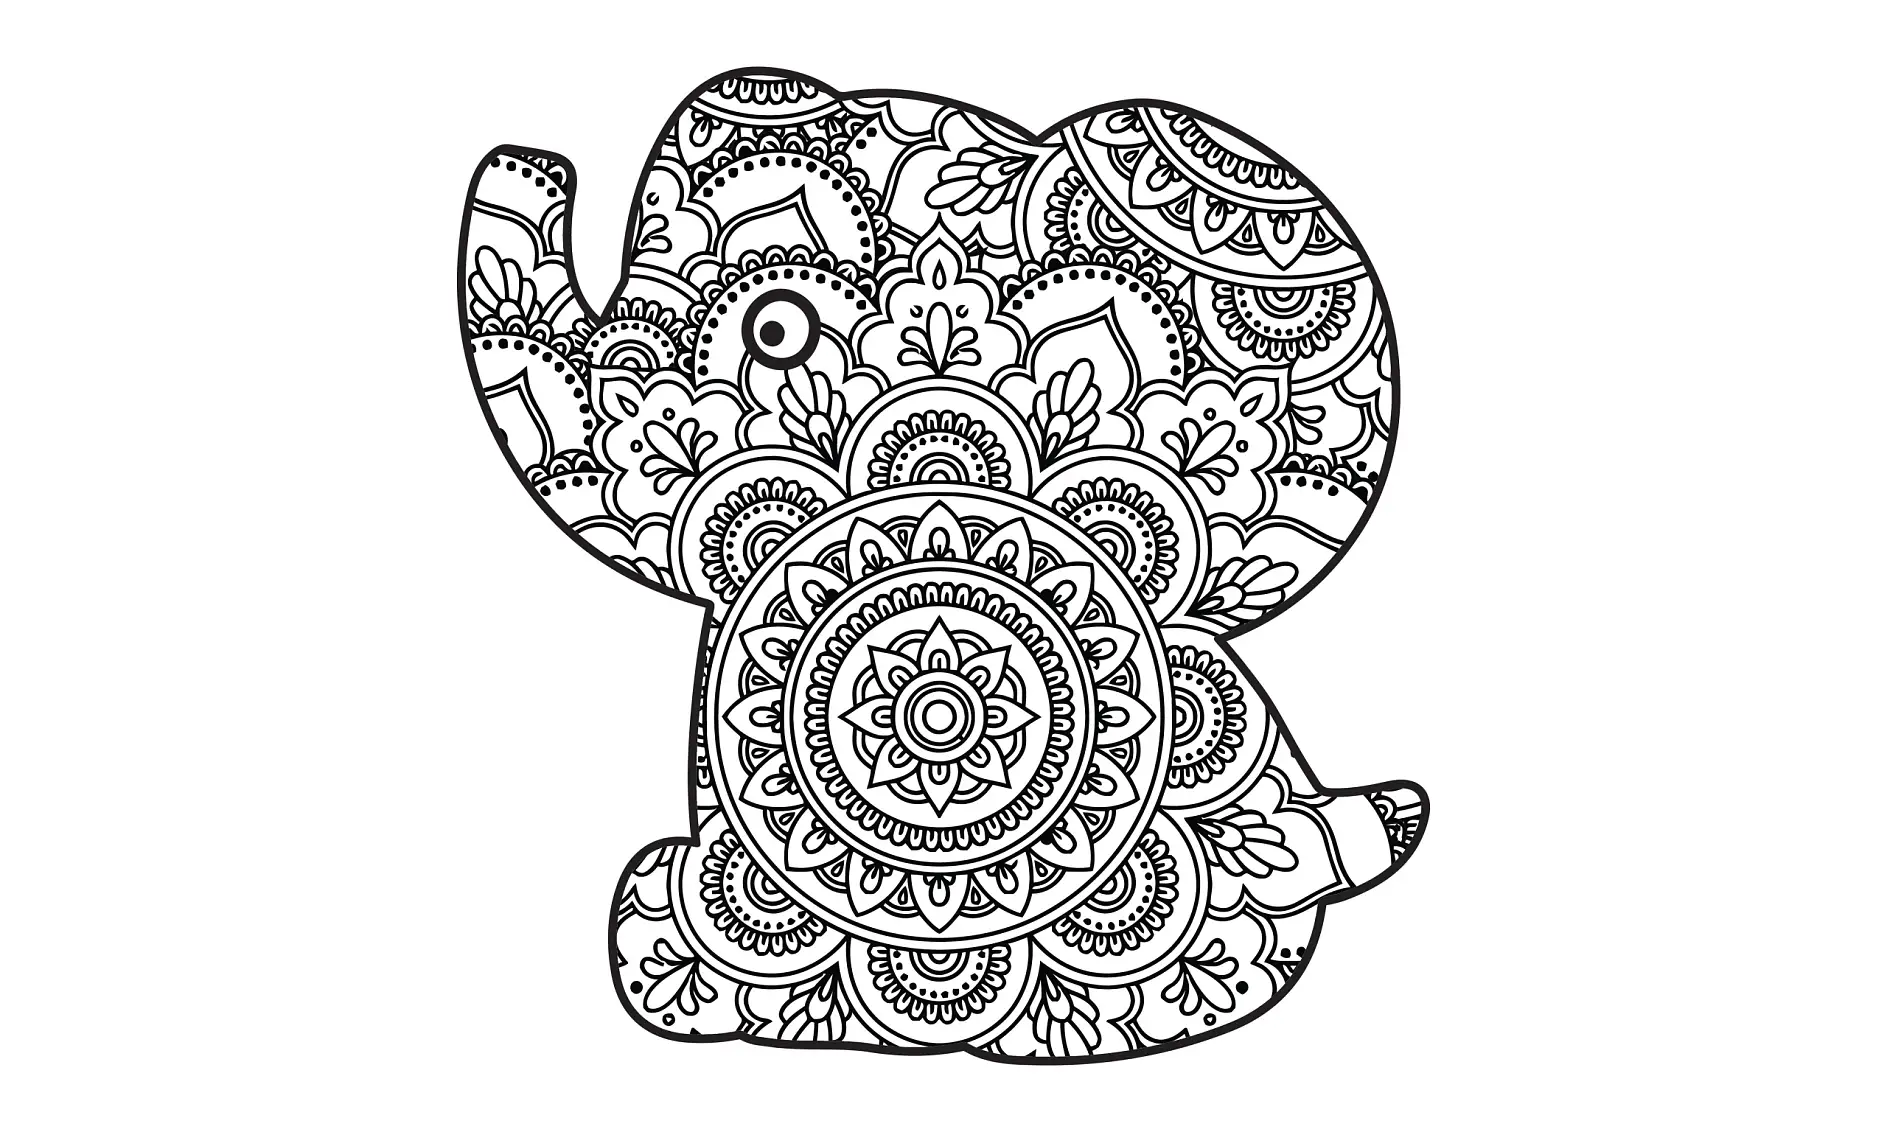 Ausmalbild Mandala Elefant mit dekorativen Mustern und Blumenornamenten